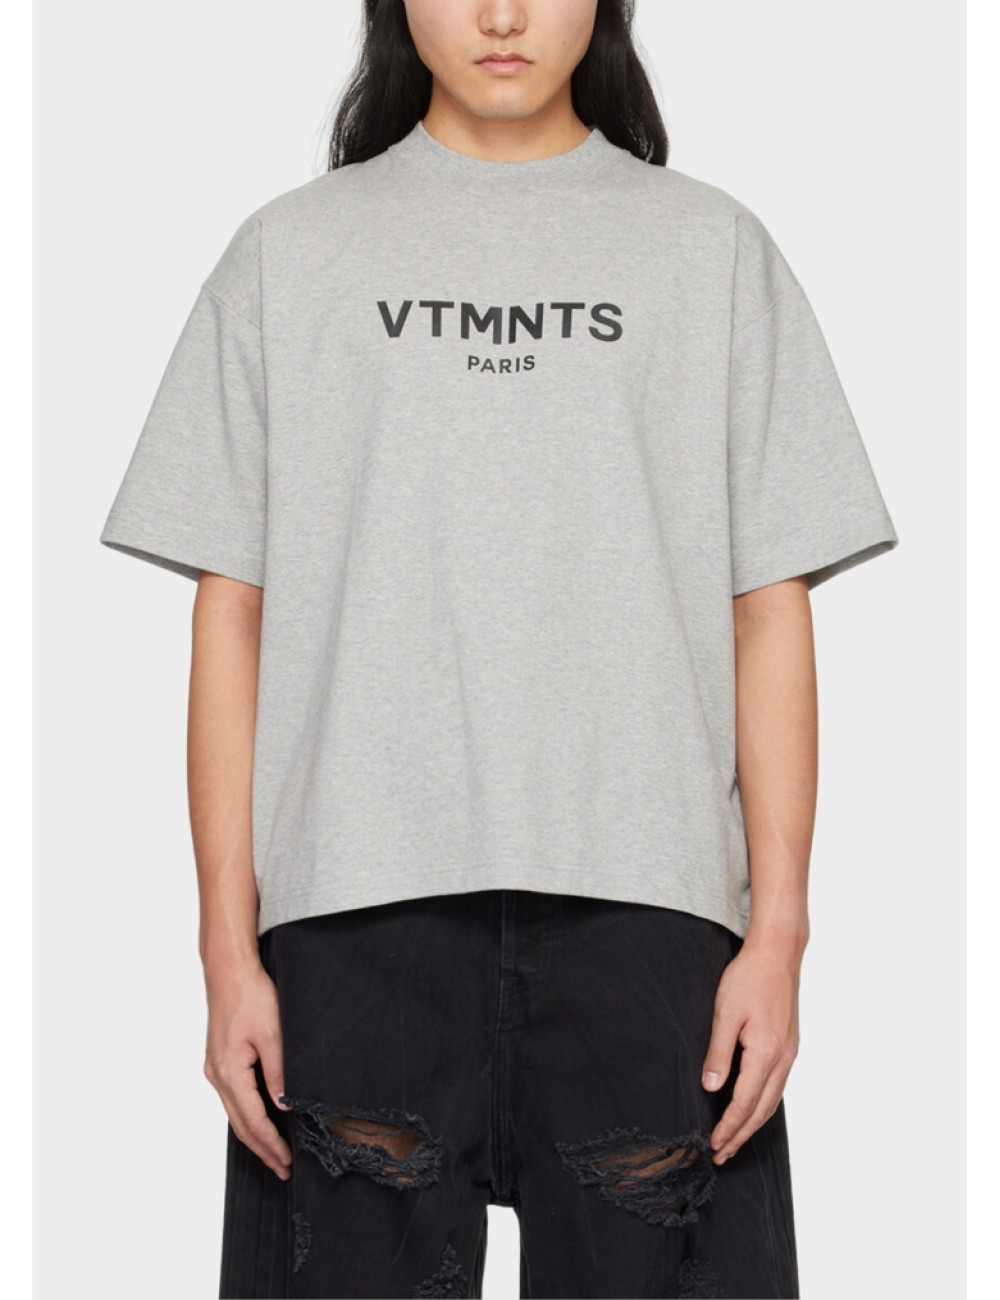 Men's 'VTMNTS' Logo T-Shirt